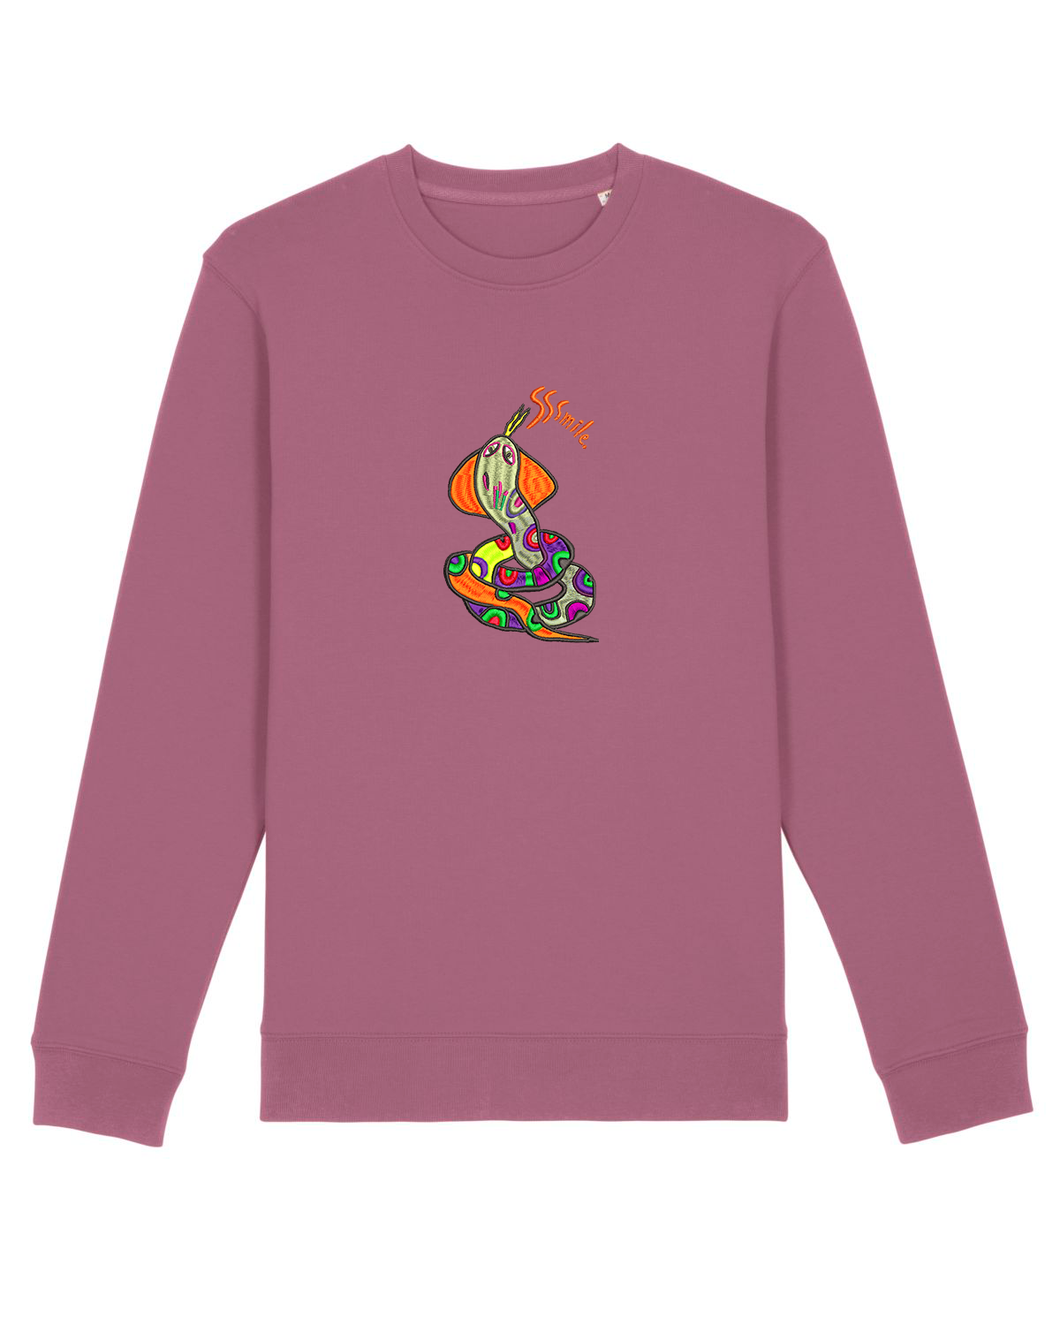 Sssmile 🐍 - Embroidered UNISEX Sweatshirt-OUTLET🔴